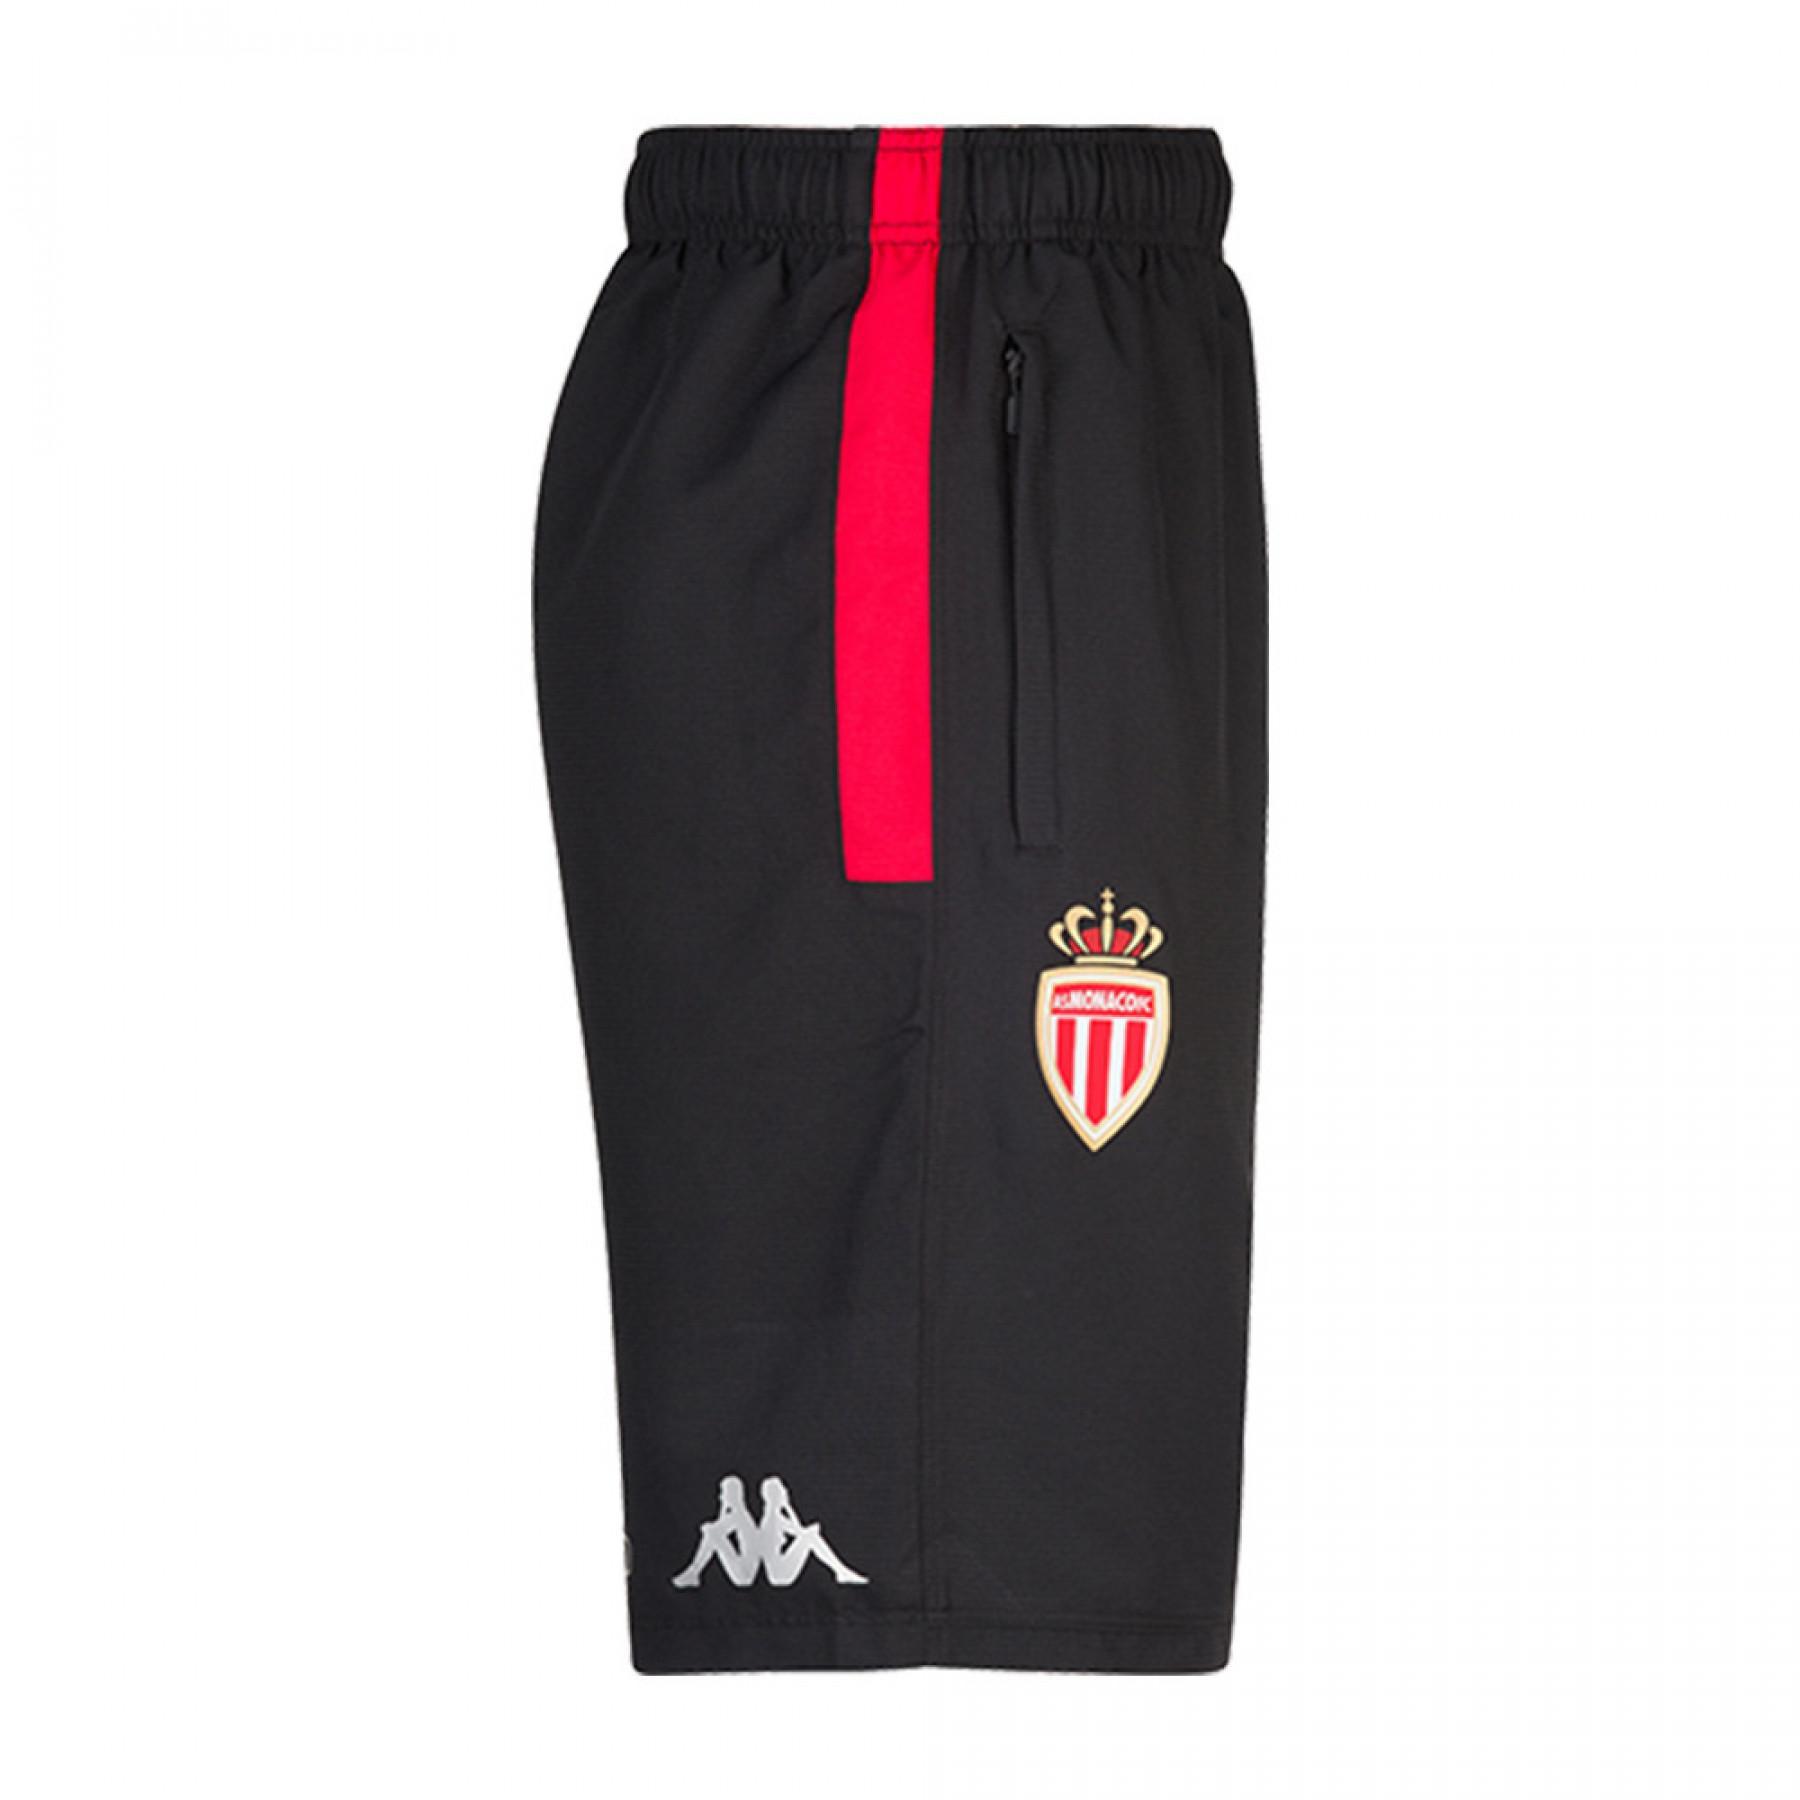 Kinder shorts alberg 3 AS Monaco